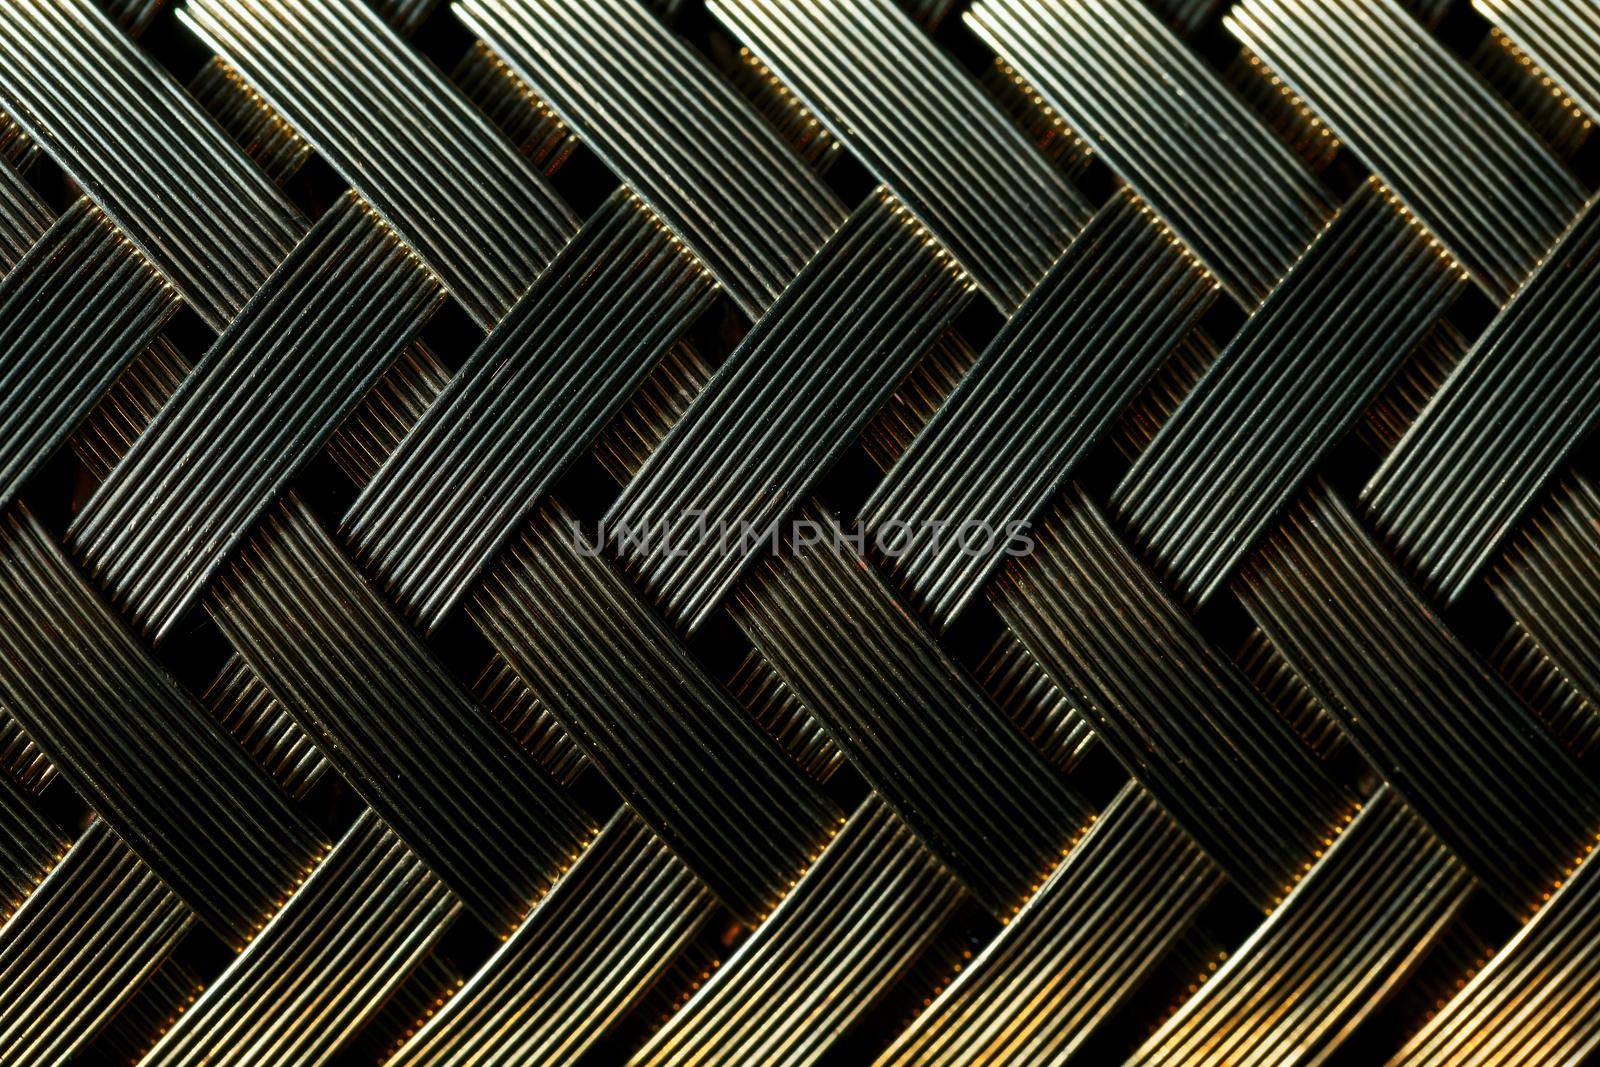 Macro view of gold fiber by AlexGrec